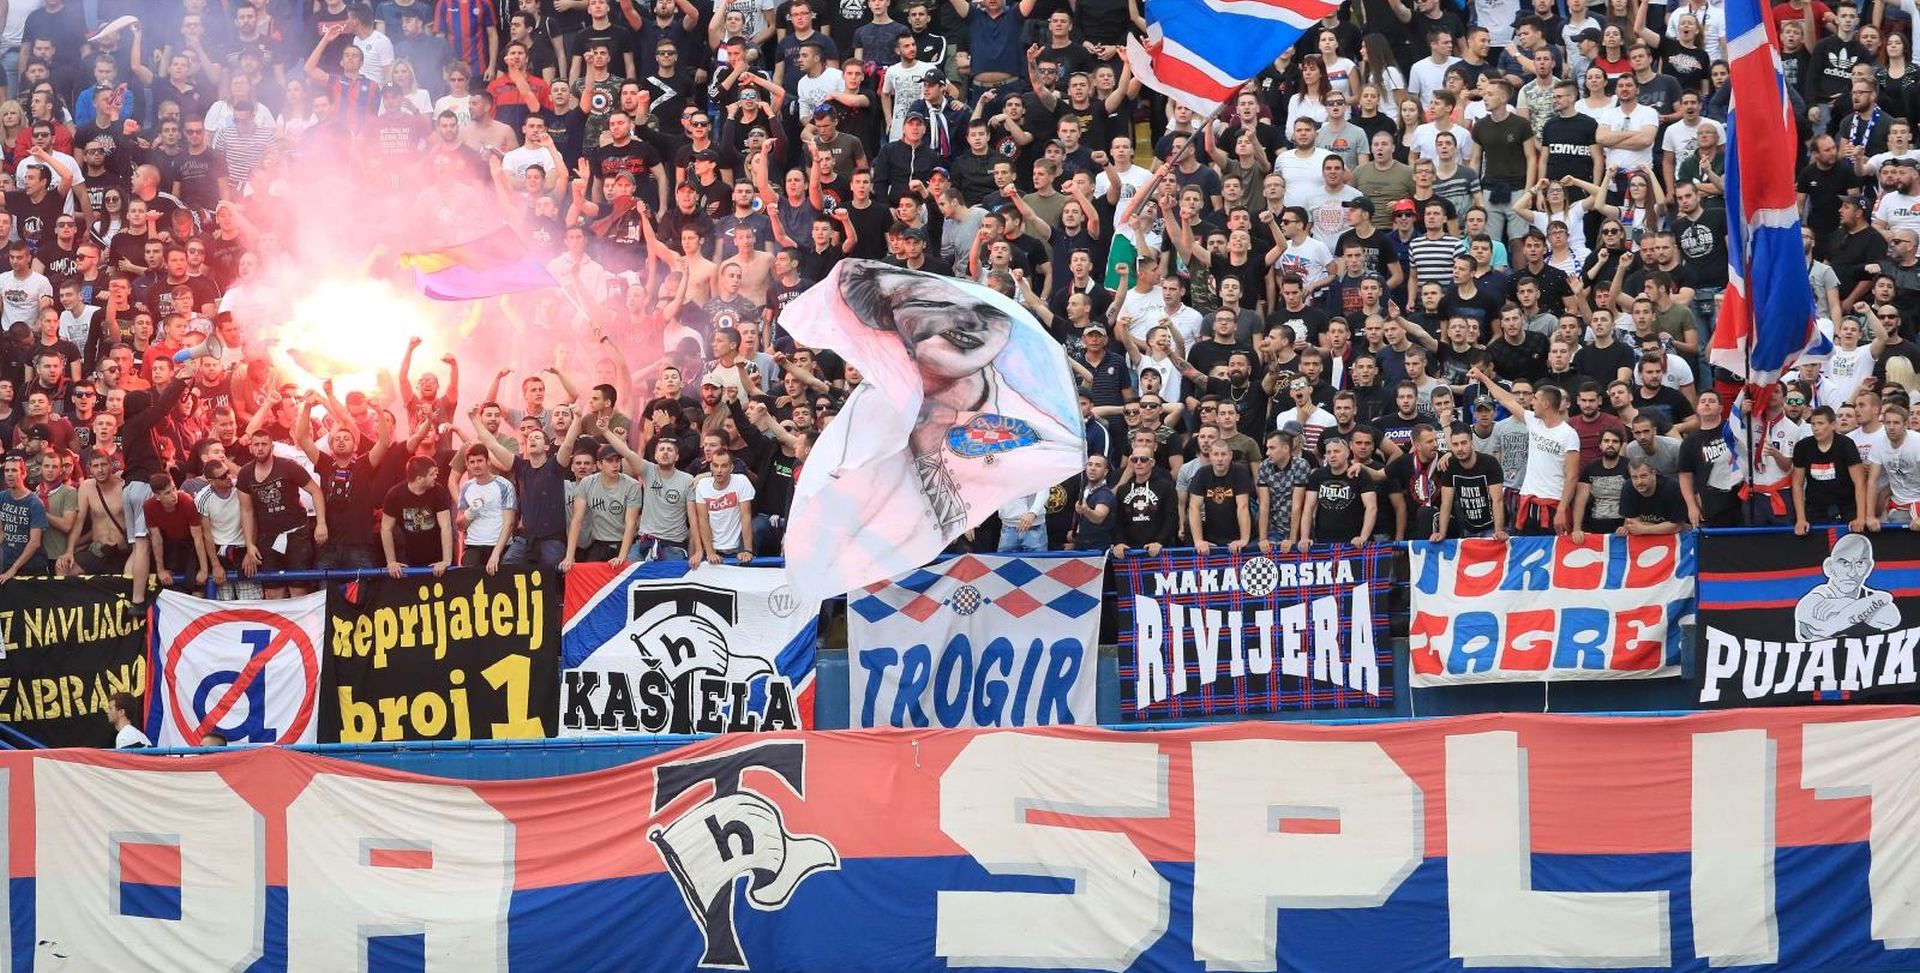 26.05.2019., stadion Maksimir, Zagreb - Hrvatski Telekom Prva liga, 36. kolo, GNK Dinamo - HNK Hajduk. Photo: Slavko Midzor/PIXSELL